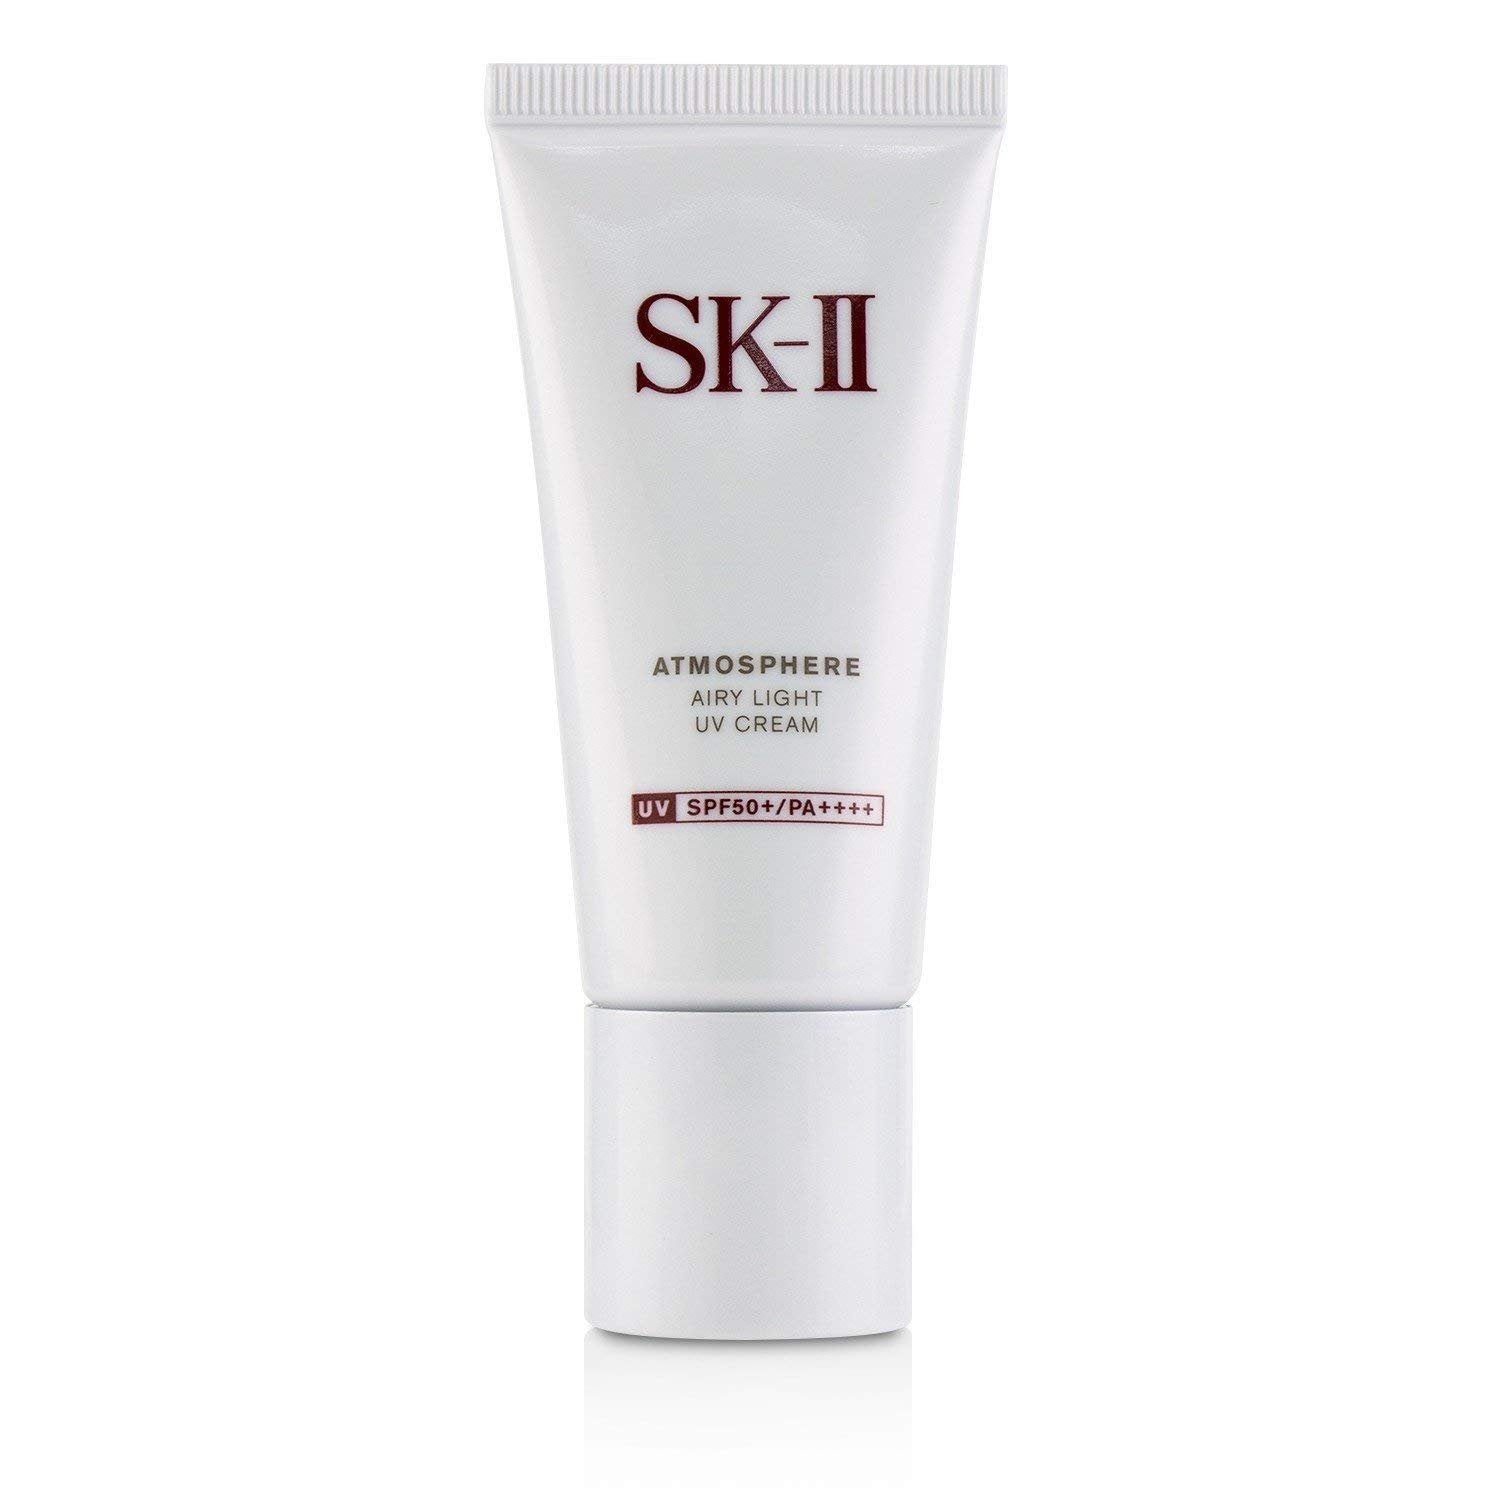 SK-II Atmosphere Airy Light Sunscreen UV Cream SPF50+ 30g 